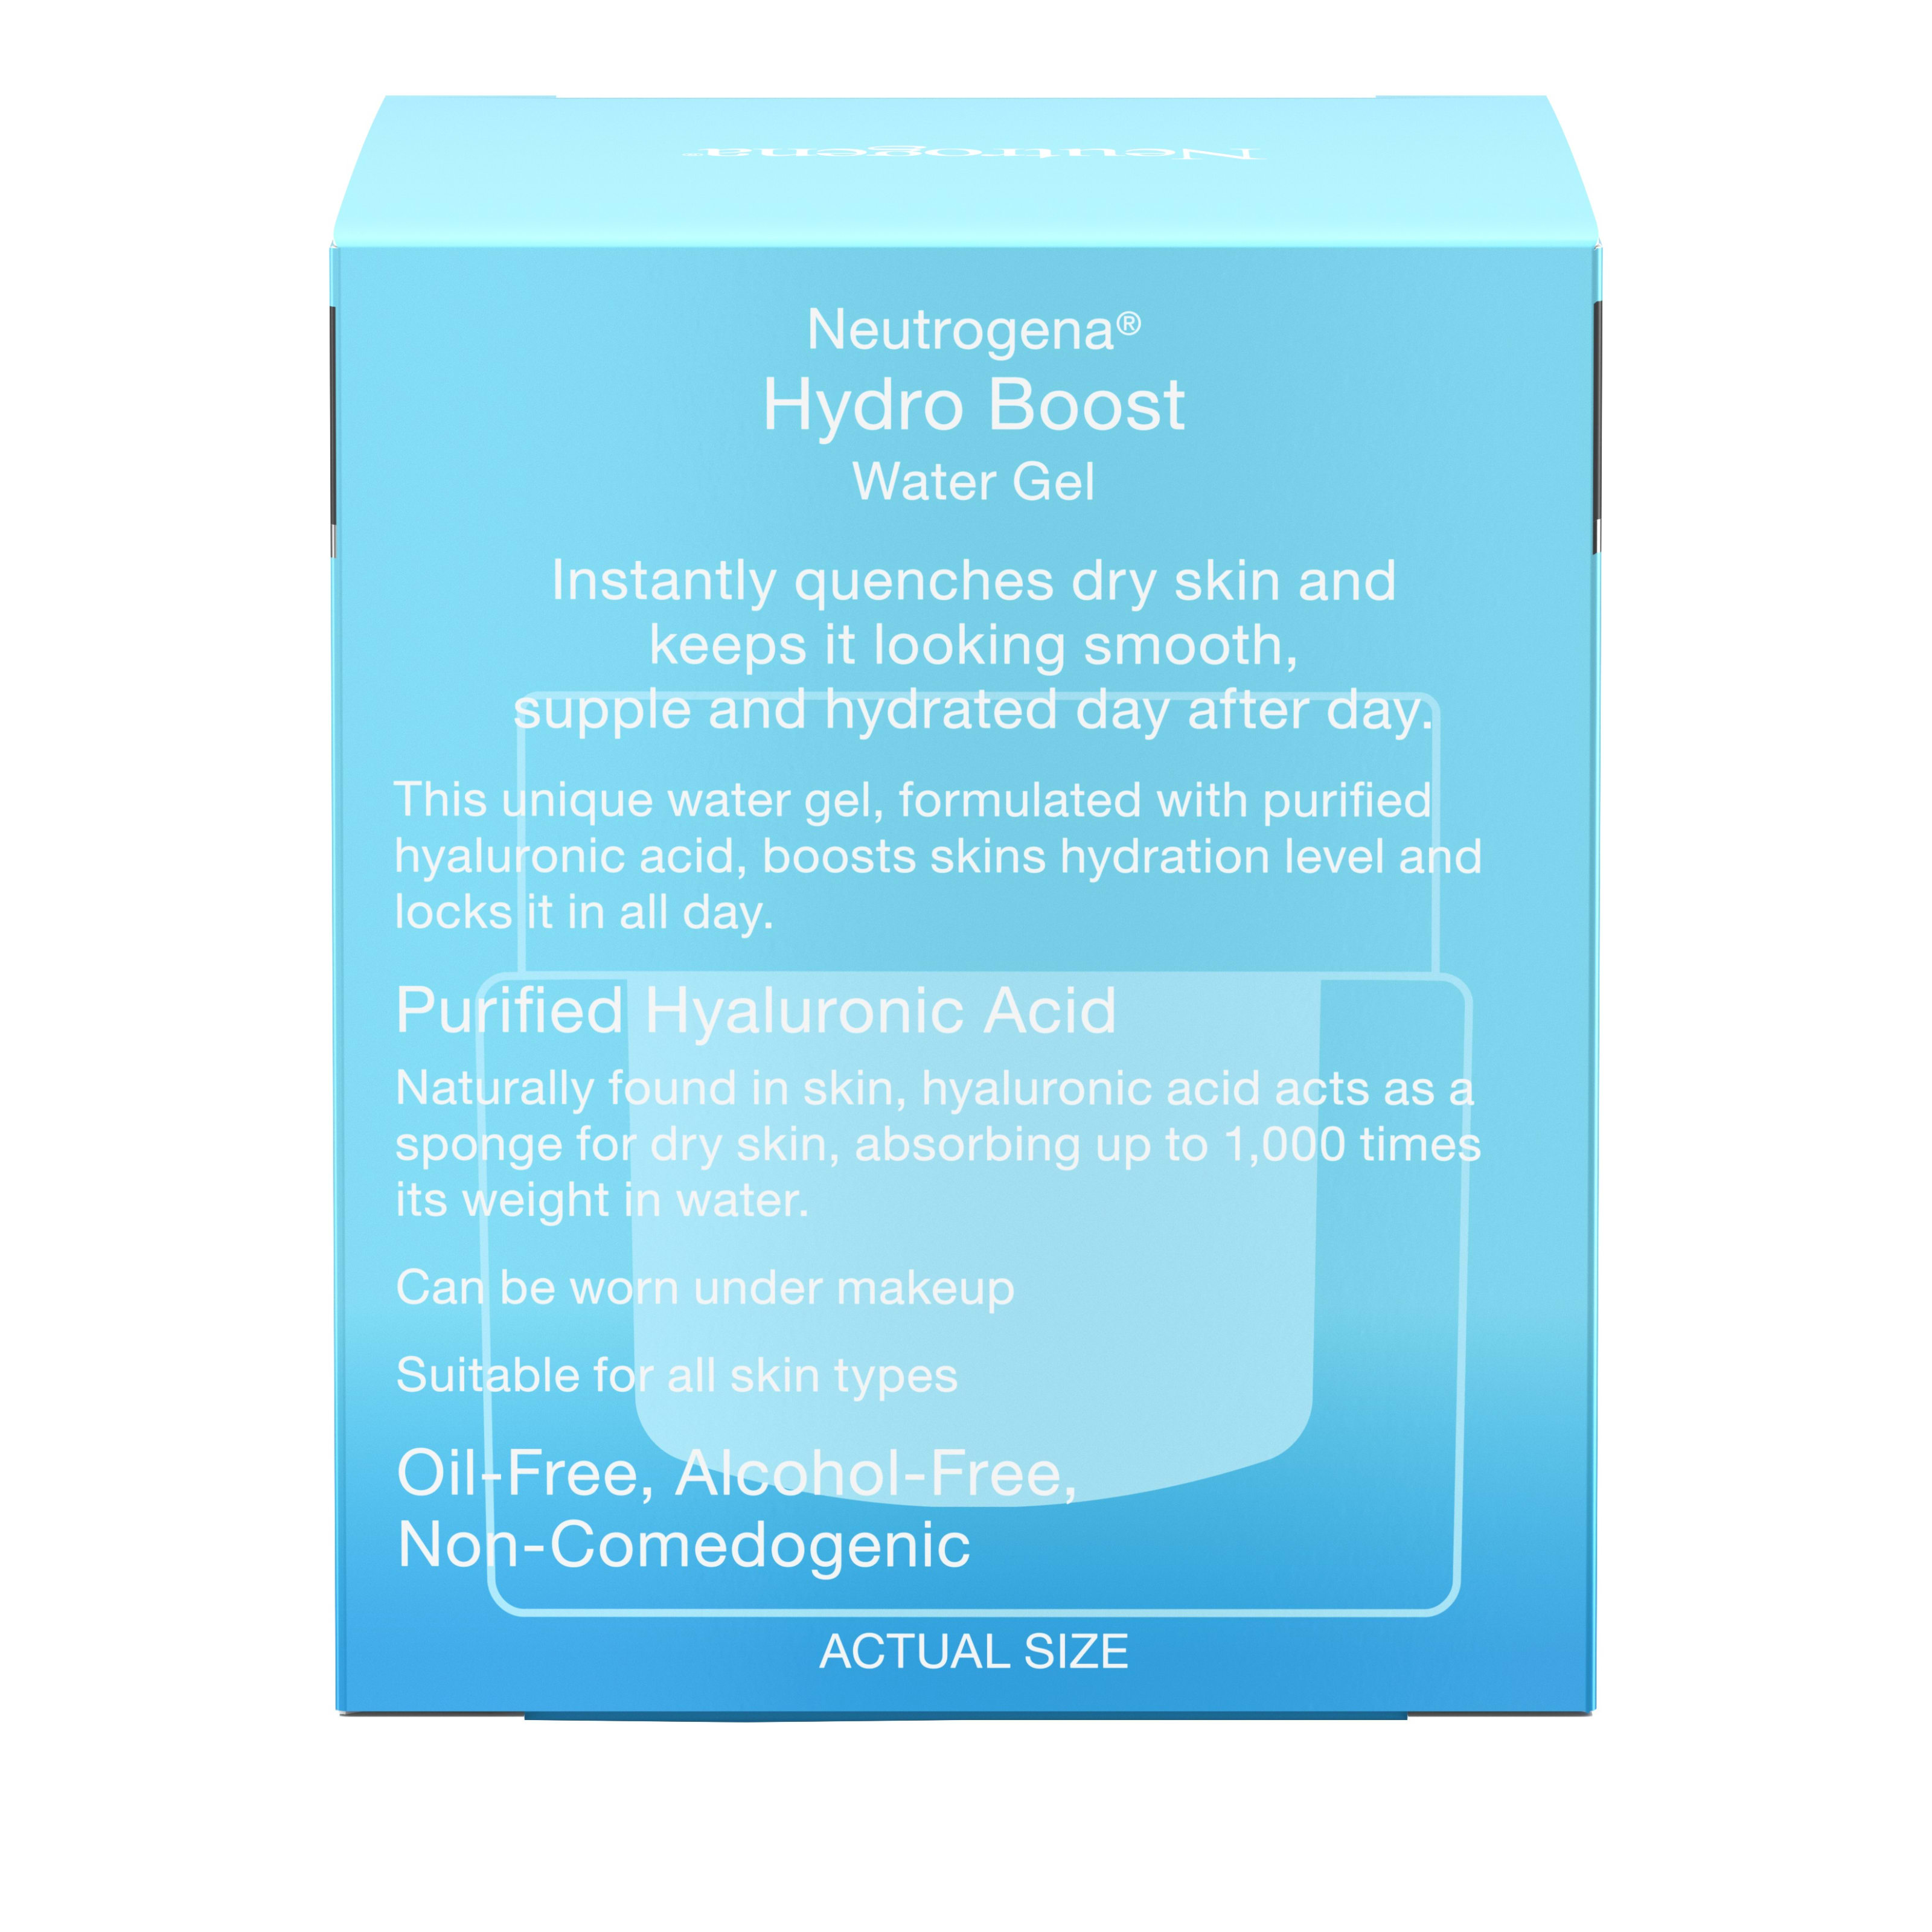 Neutrogena Hydro Boost Hyaluronic Acid Face Moisturizer for Dry Skin, 0.5 oz - image 4 of 10